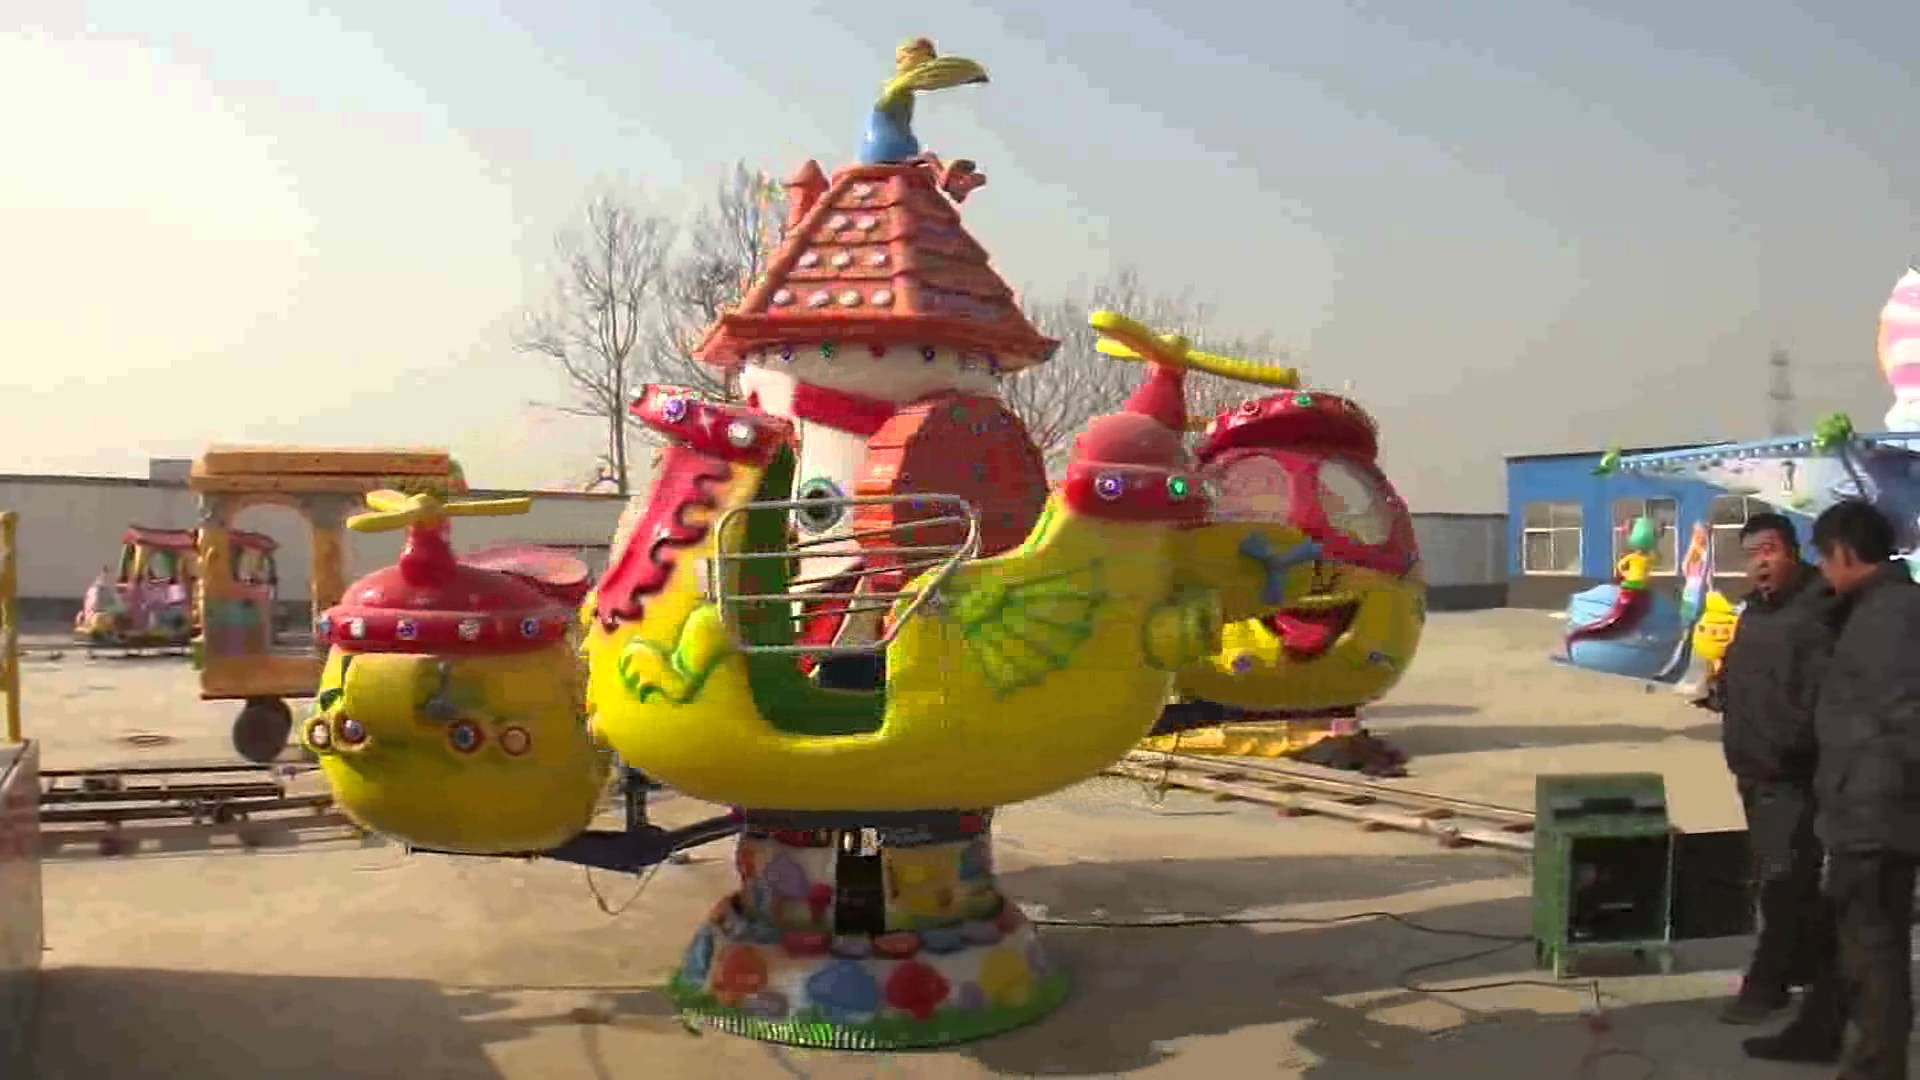 kids funny rides - amusement theme park rides - YouTube